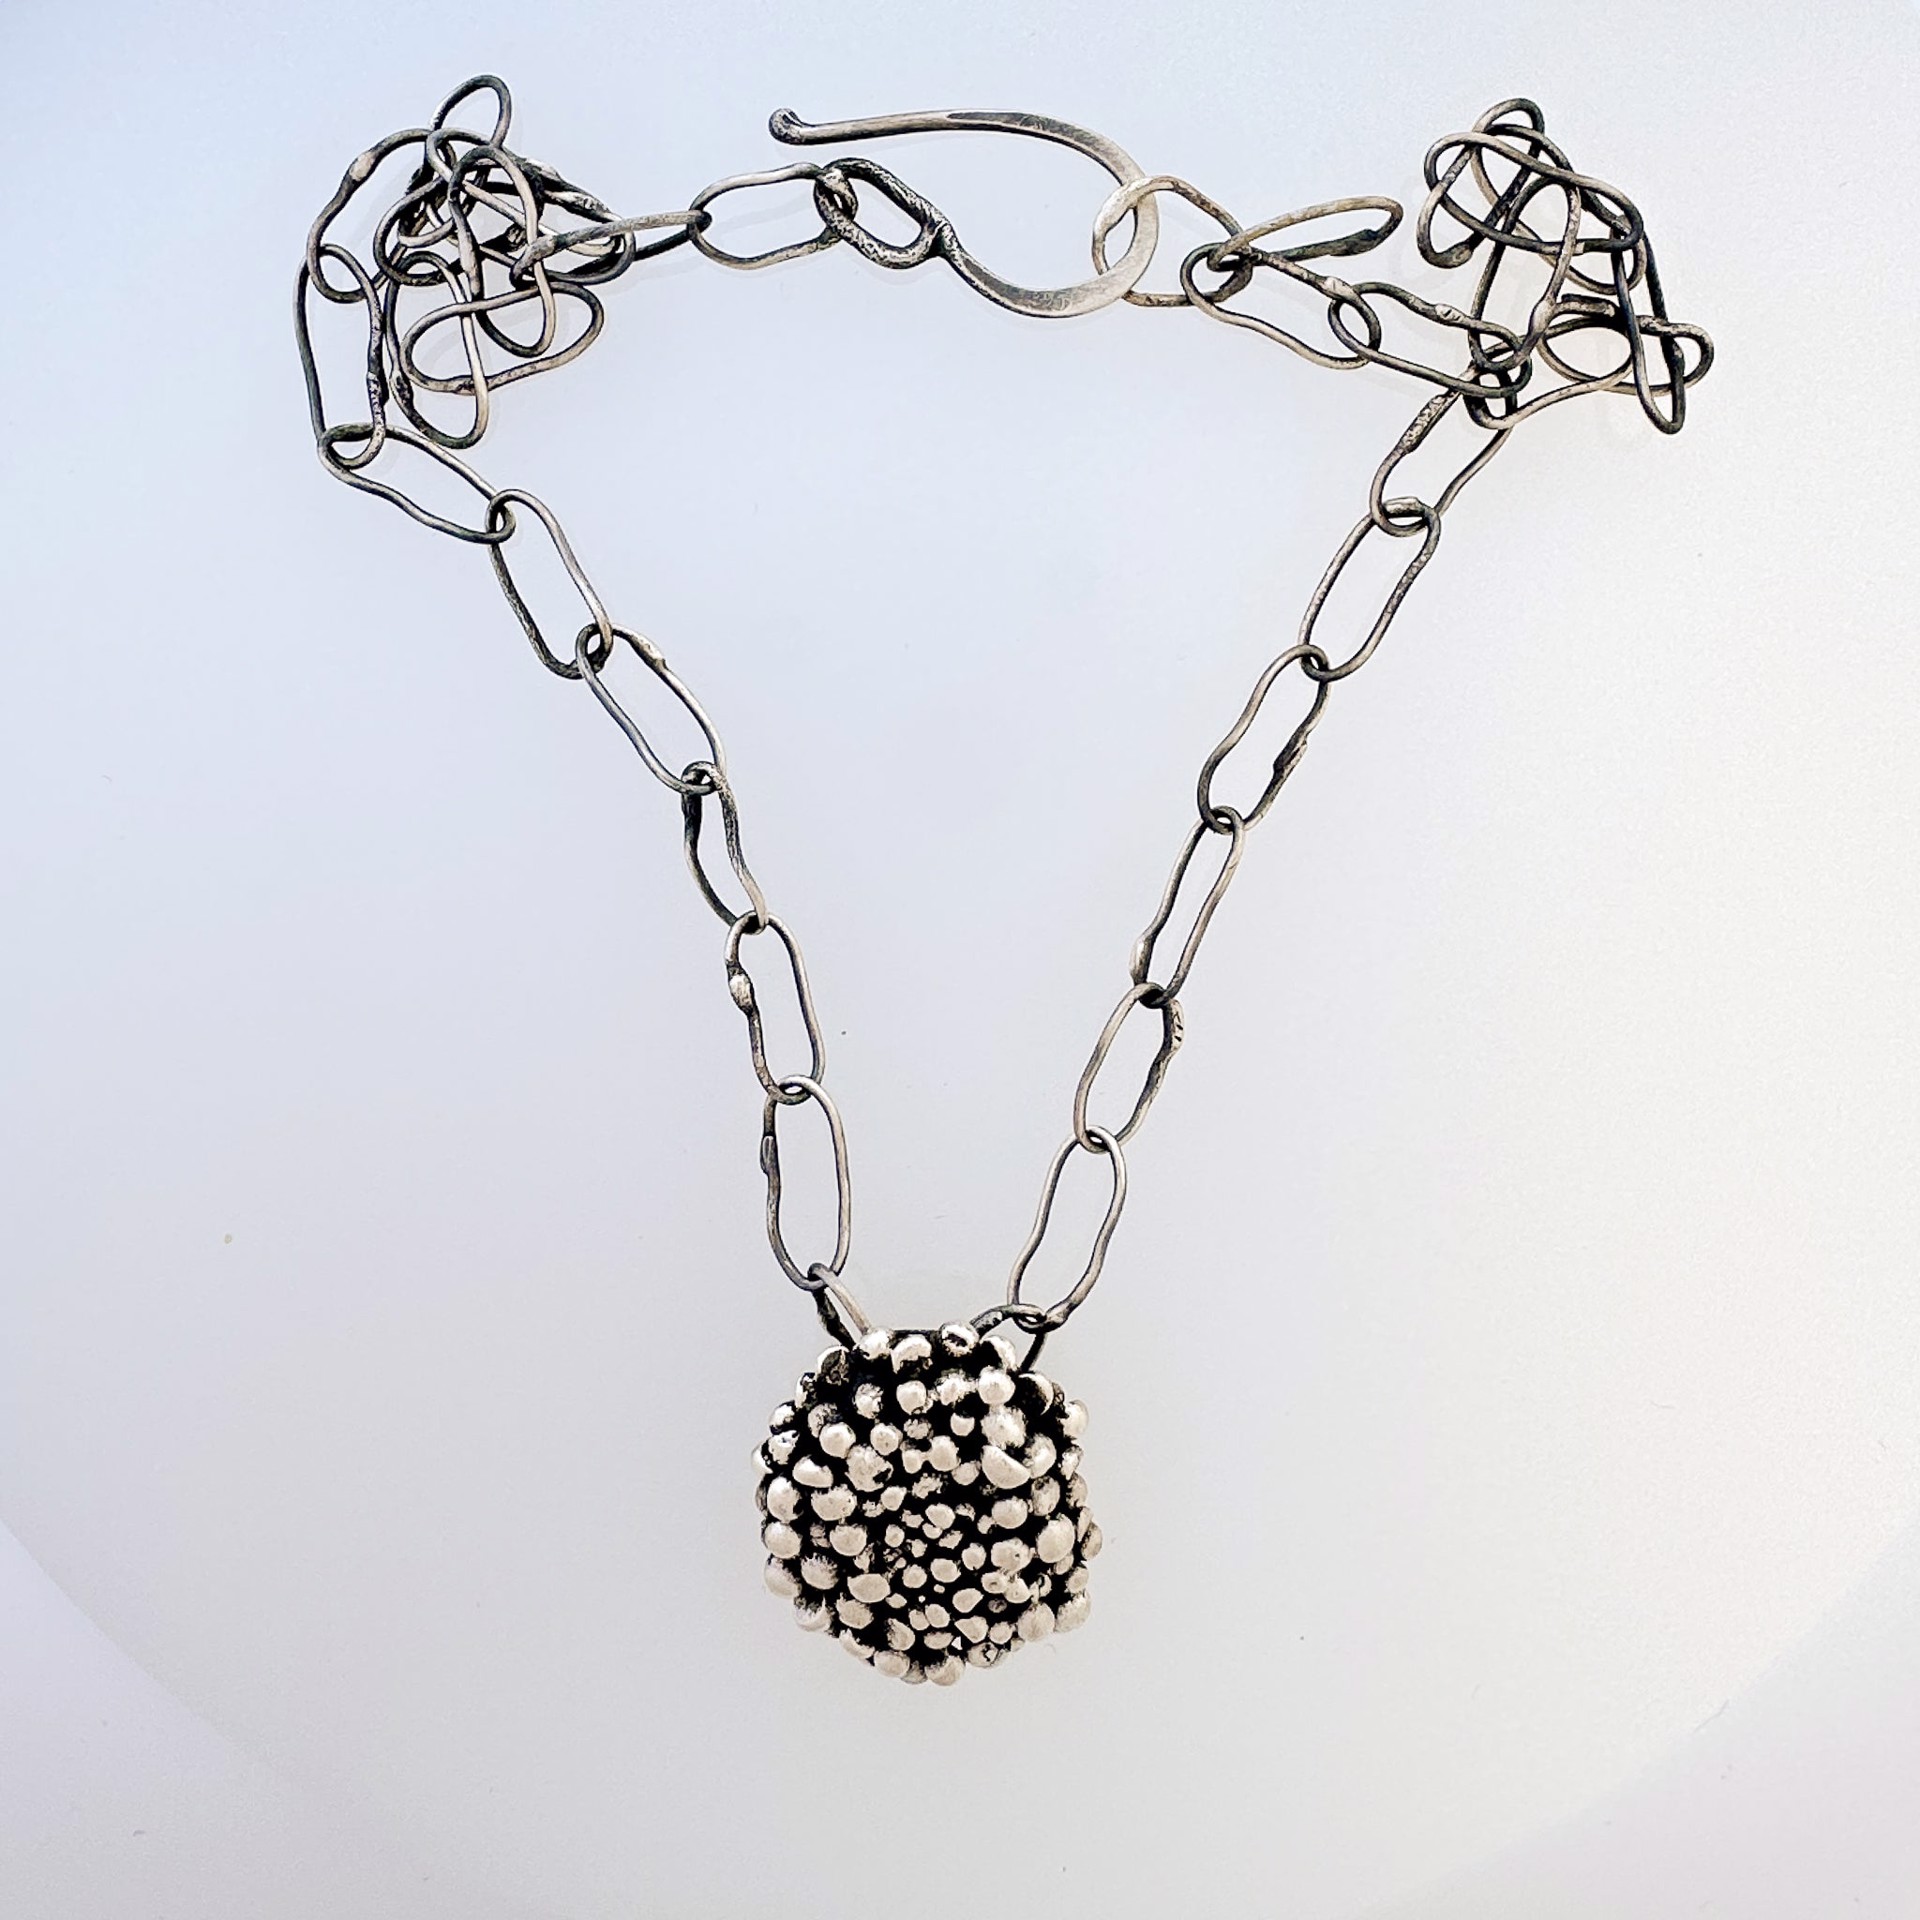 Neckpiece 2- Pendant + Chain by Lori Metals